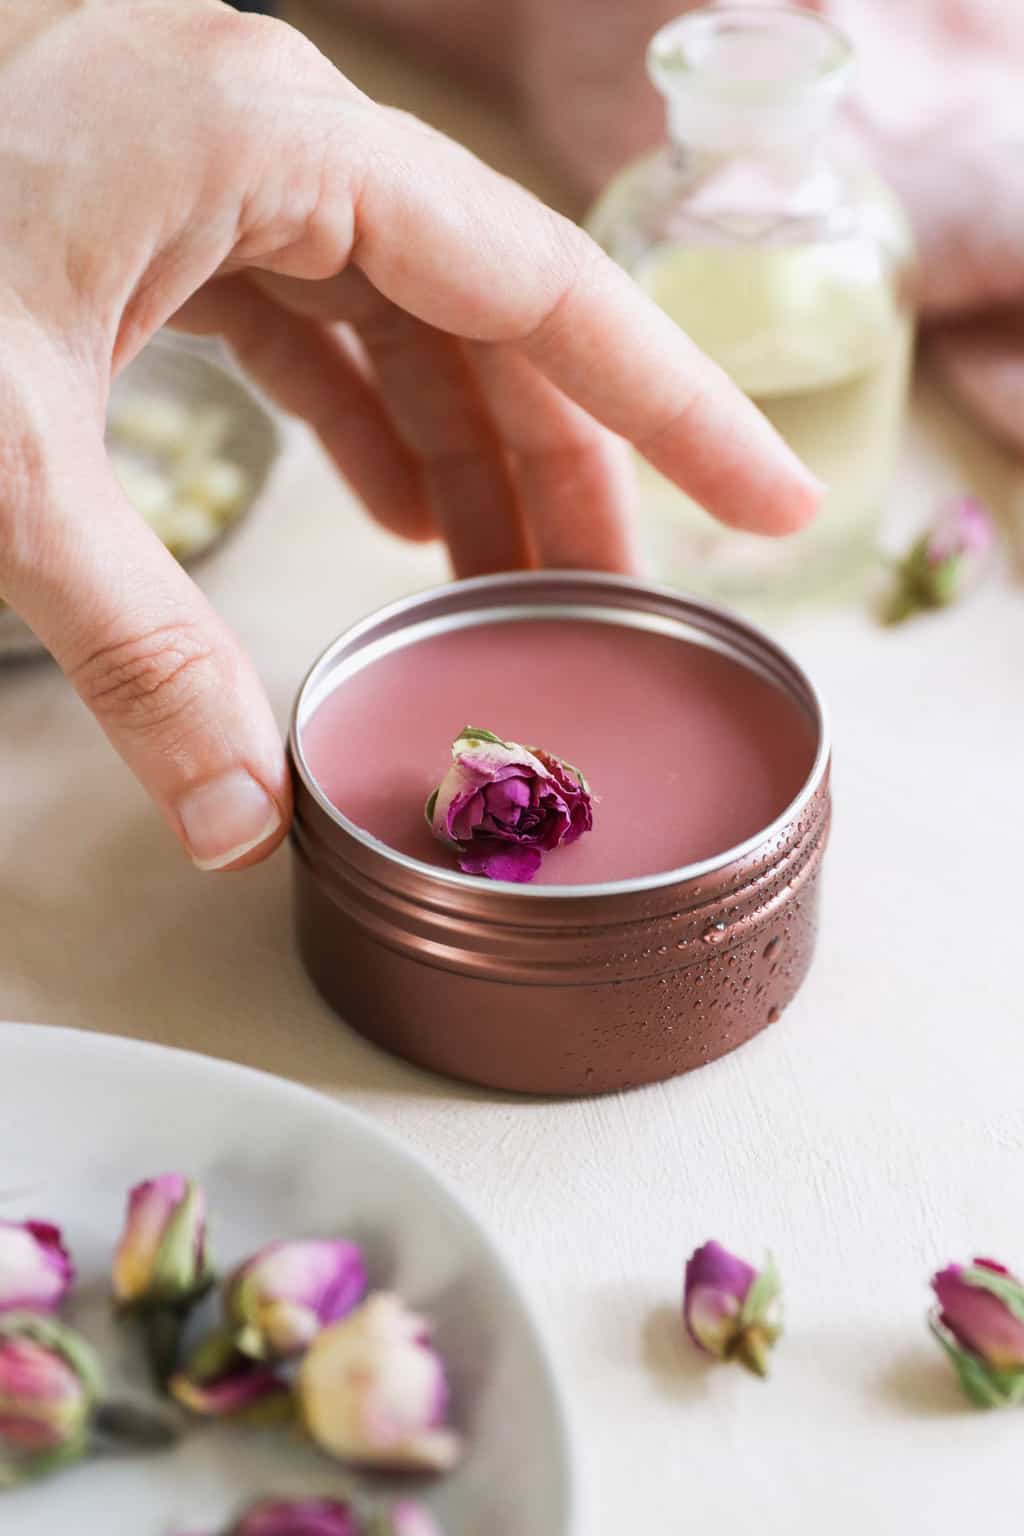 This DIY 5-ingredient rose salve is perfect for taming flyaways, healing chapped lips, soothing irritation and making skin glow.